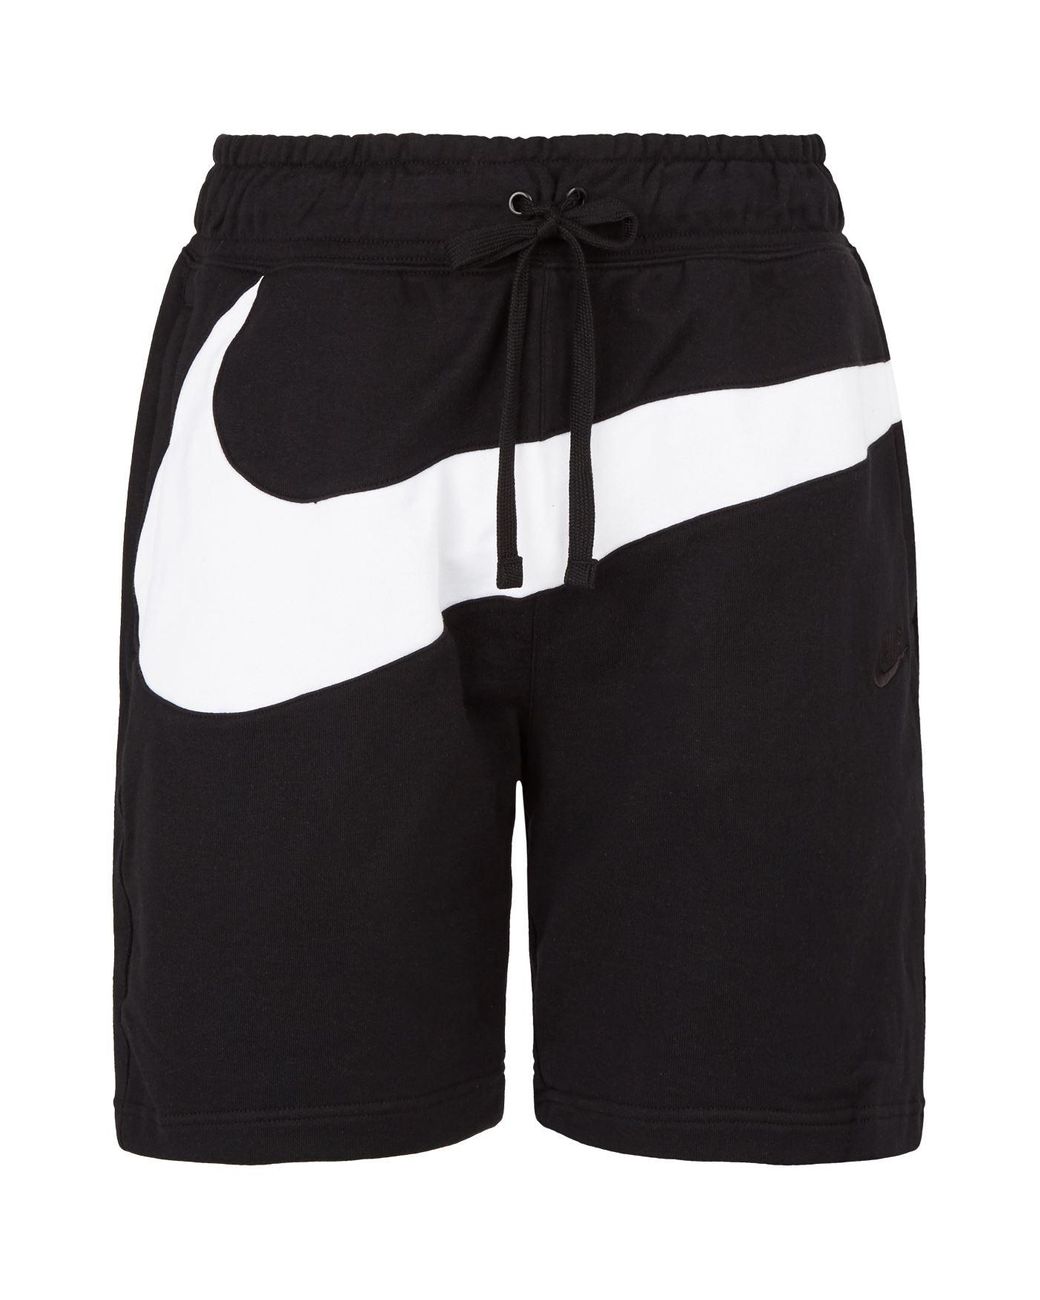 Nike Swoosh Sweat Shorts in Black for Men